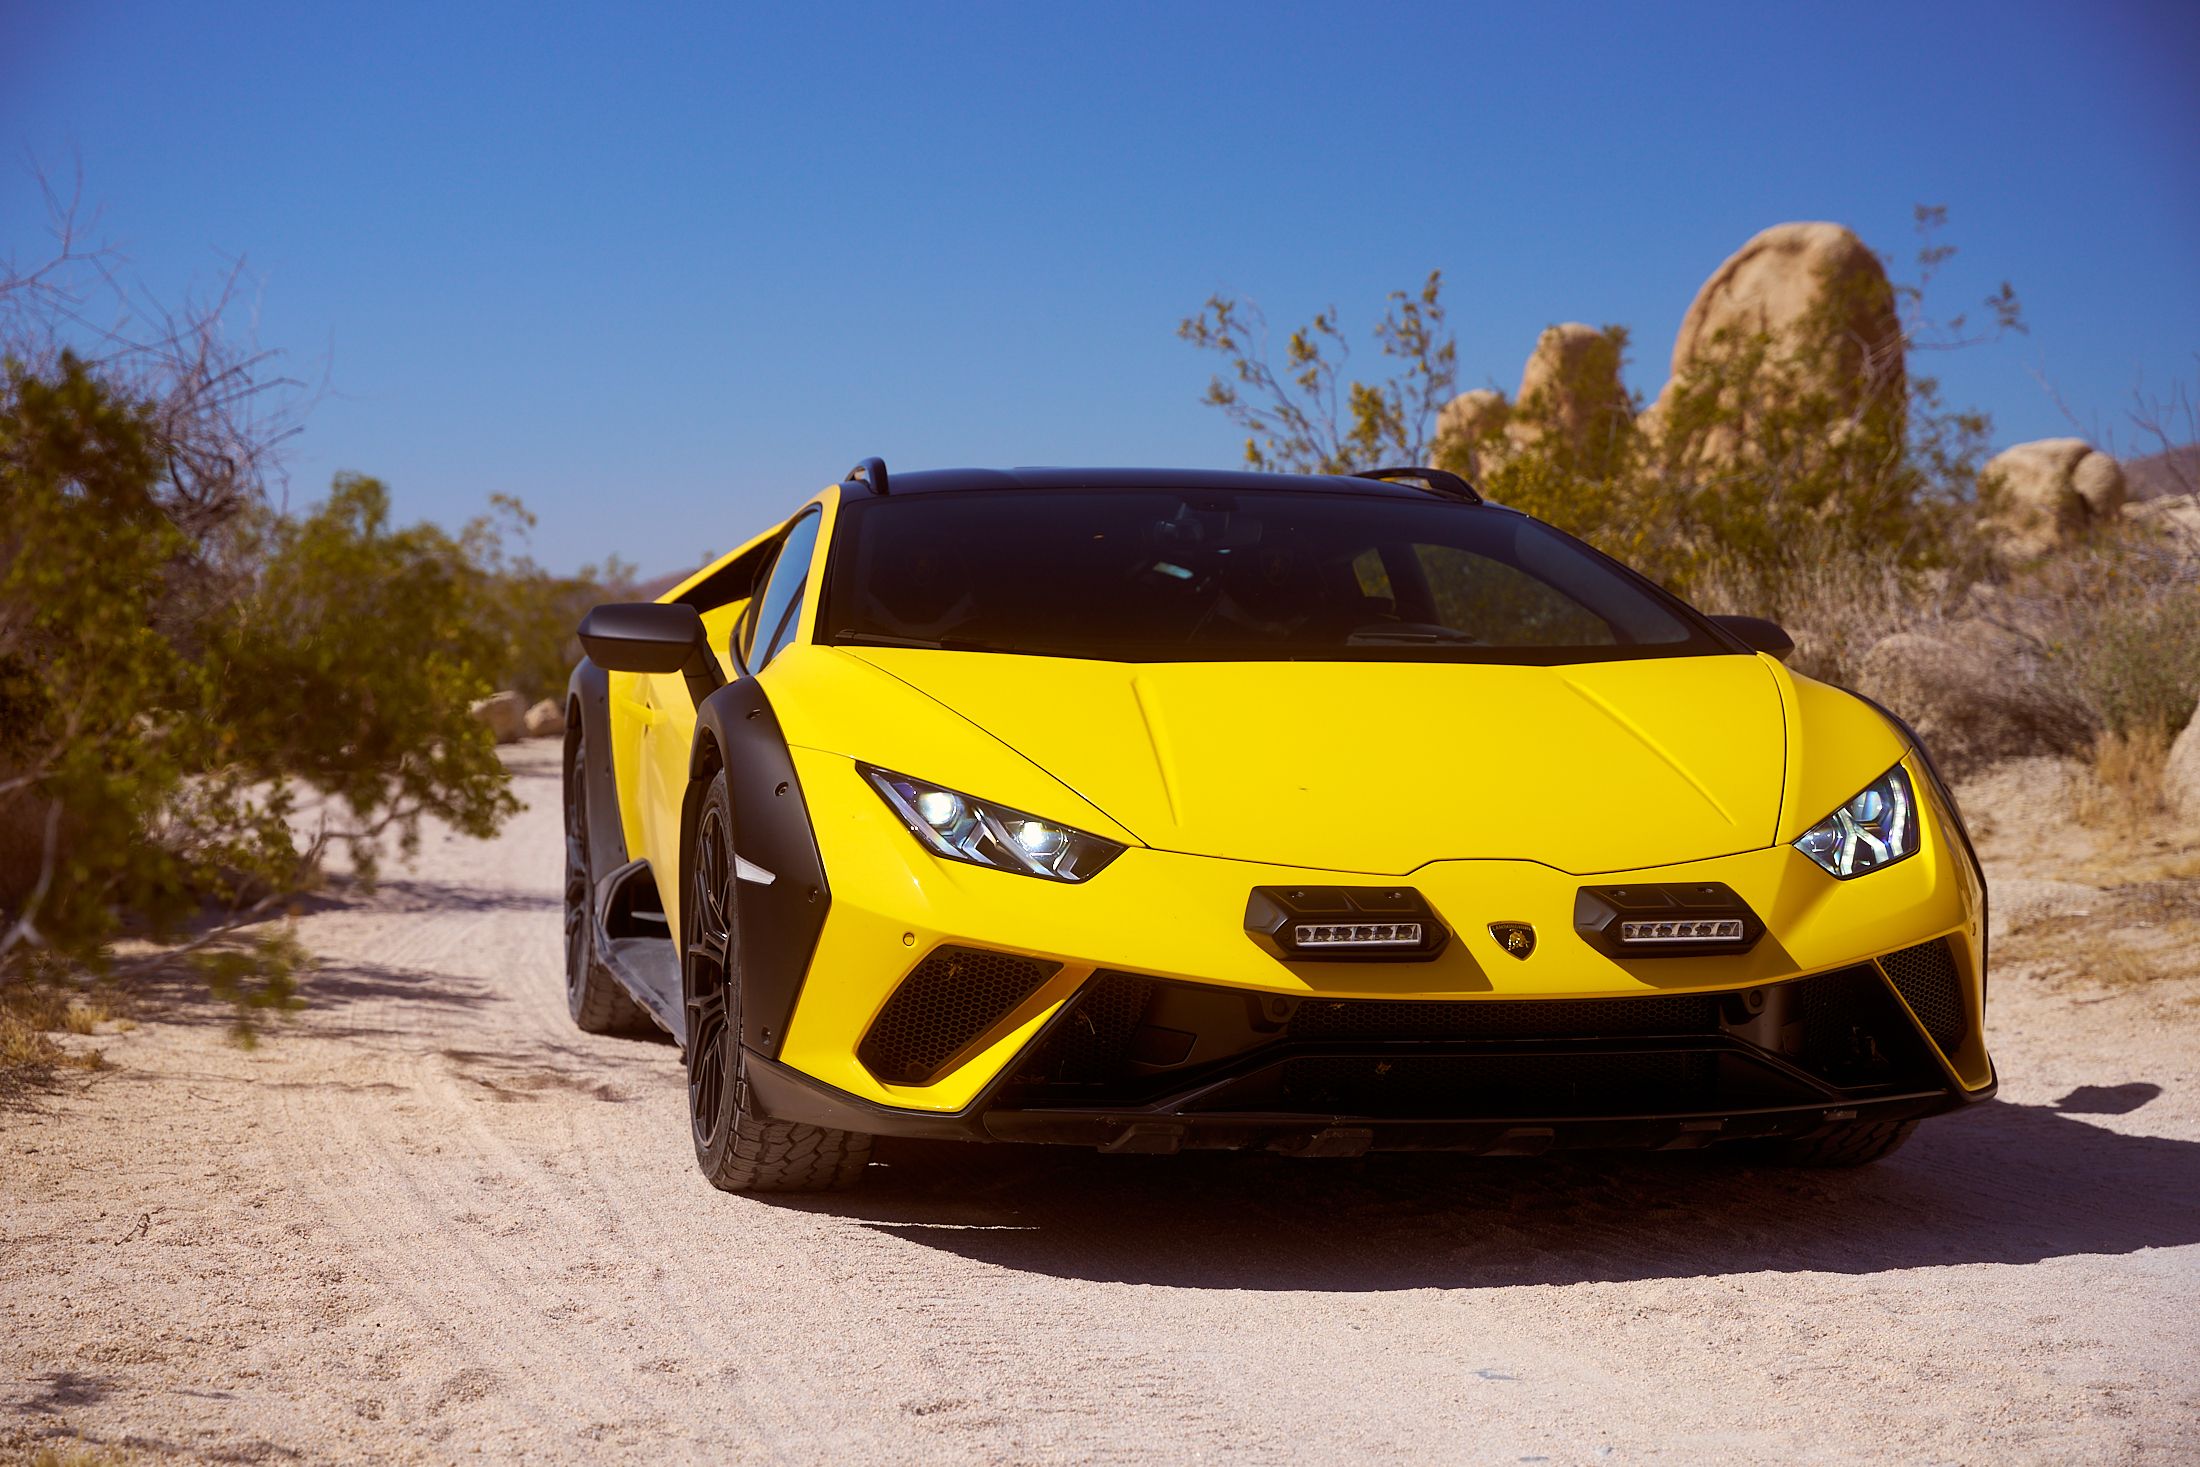 Desert-drifting the Lamborghini Huracan Sterrato — First Drive | Driving